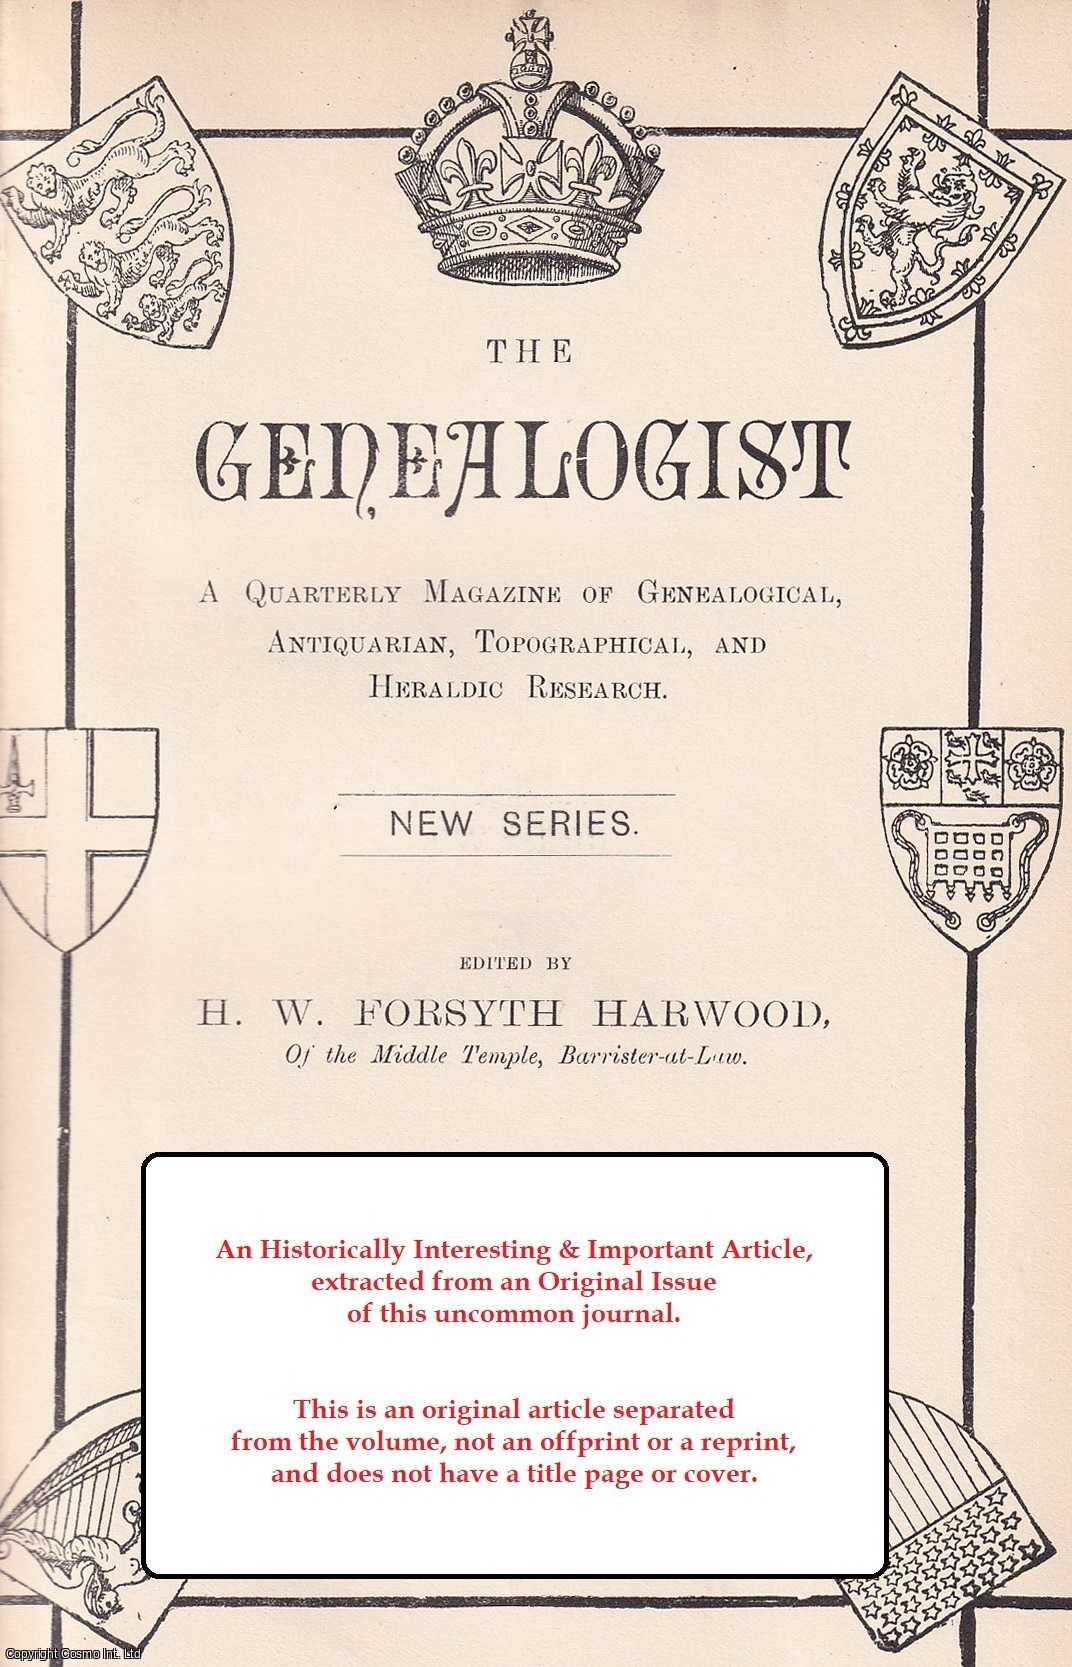 G. E. C. - Pedigree of Castillion - Part II. An original article from The Genealogist, 1900.